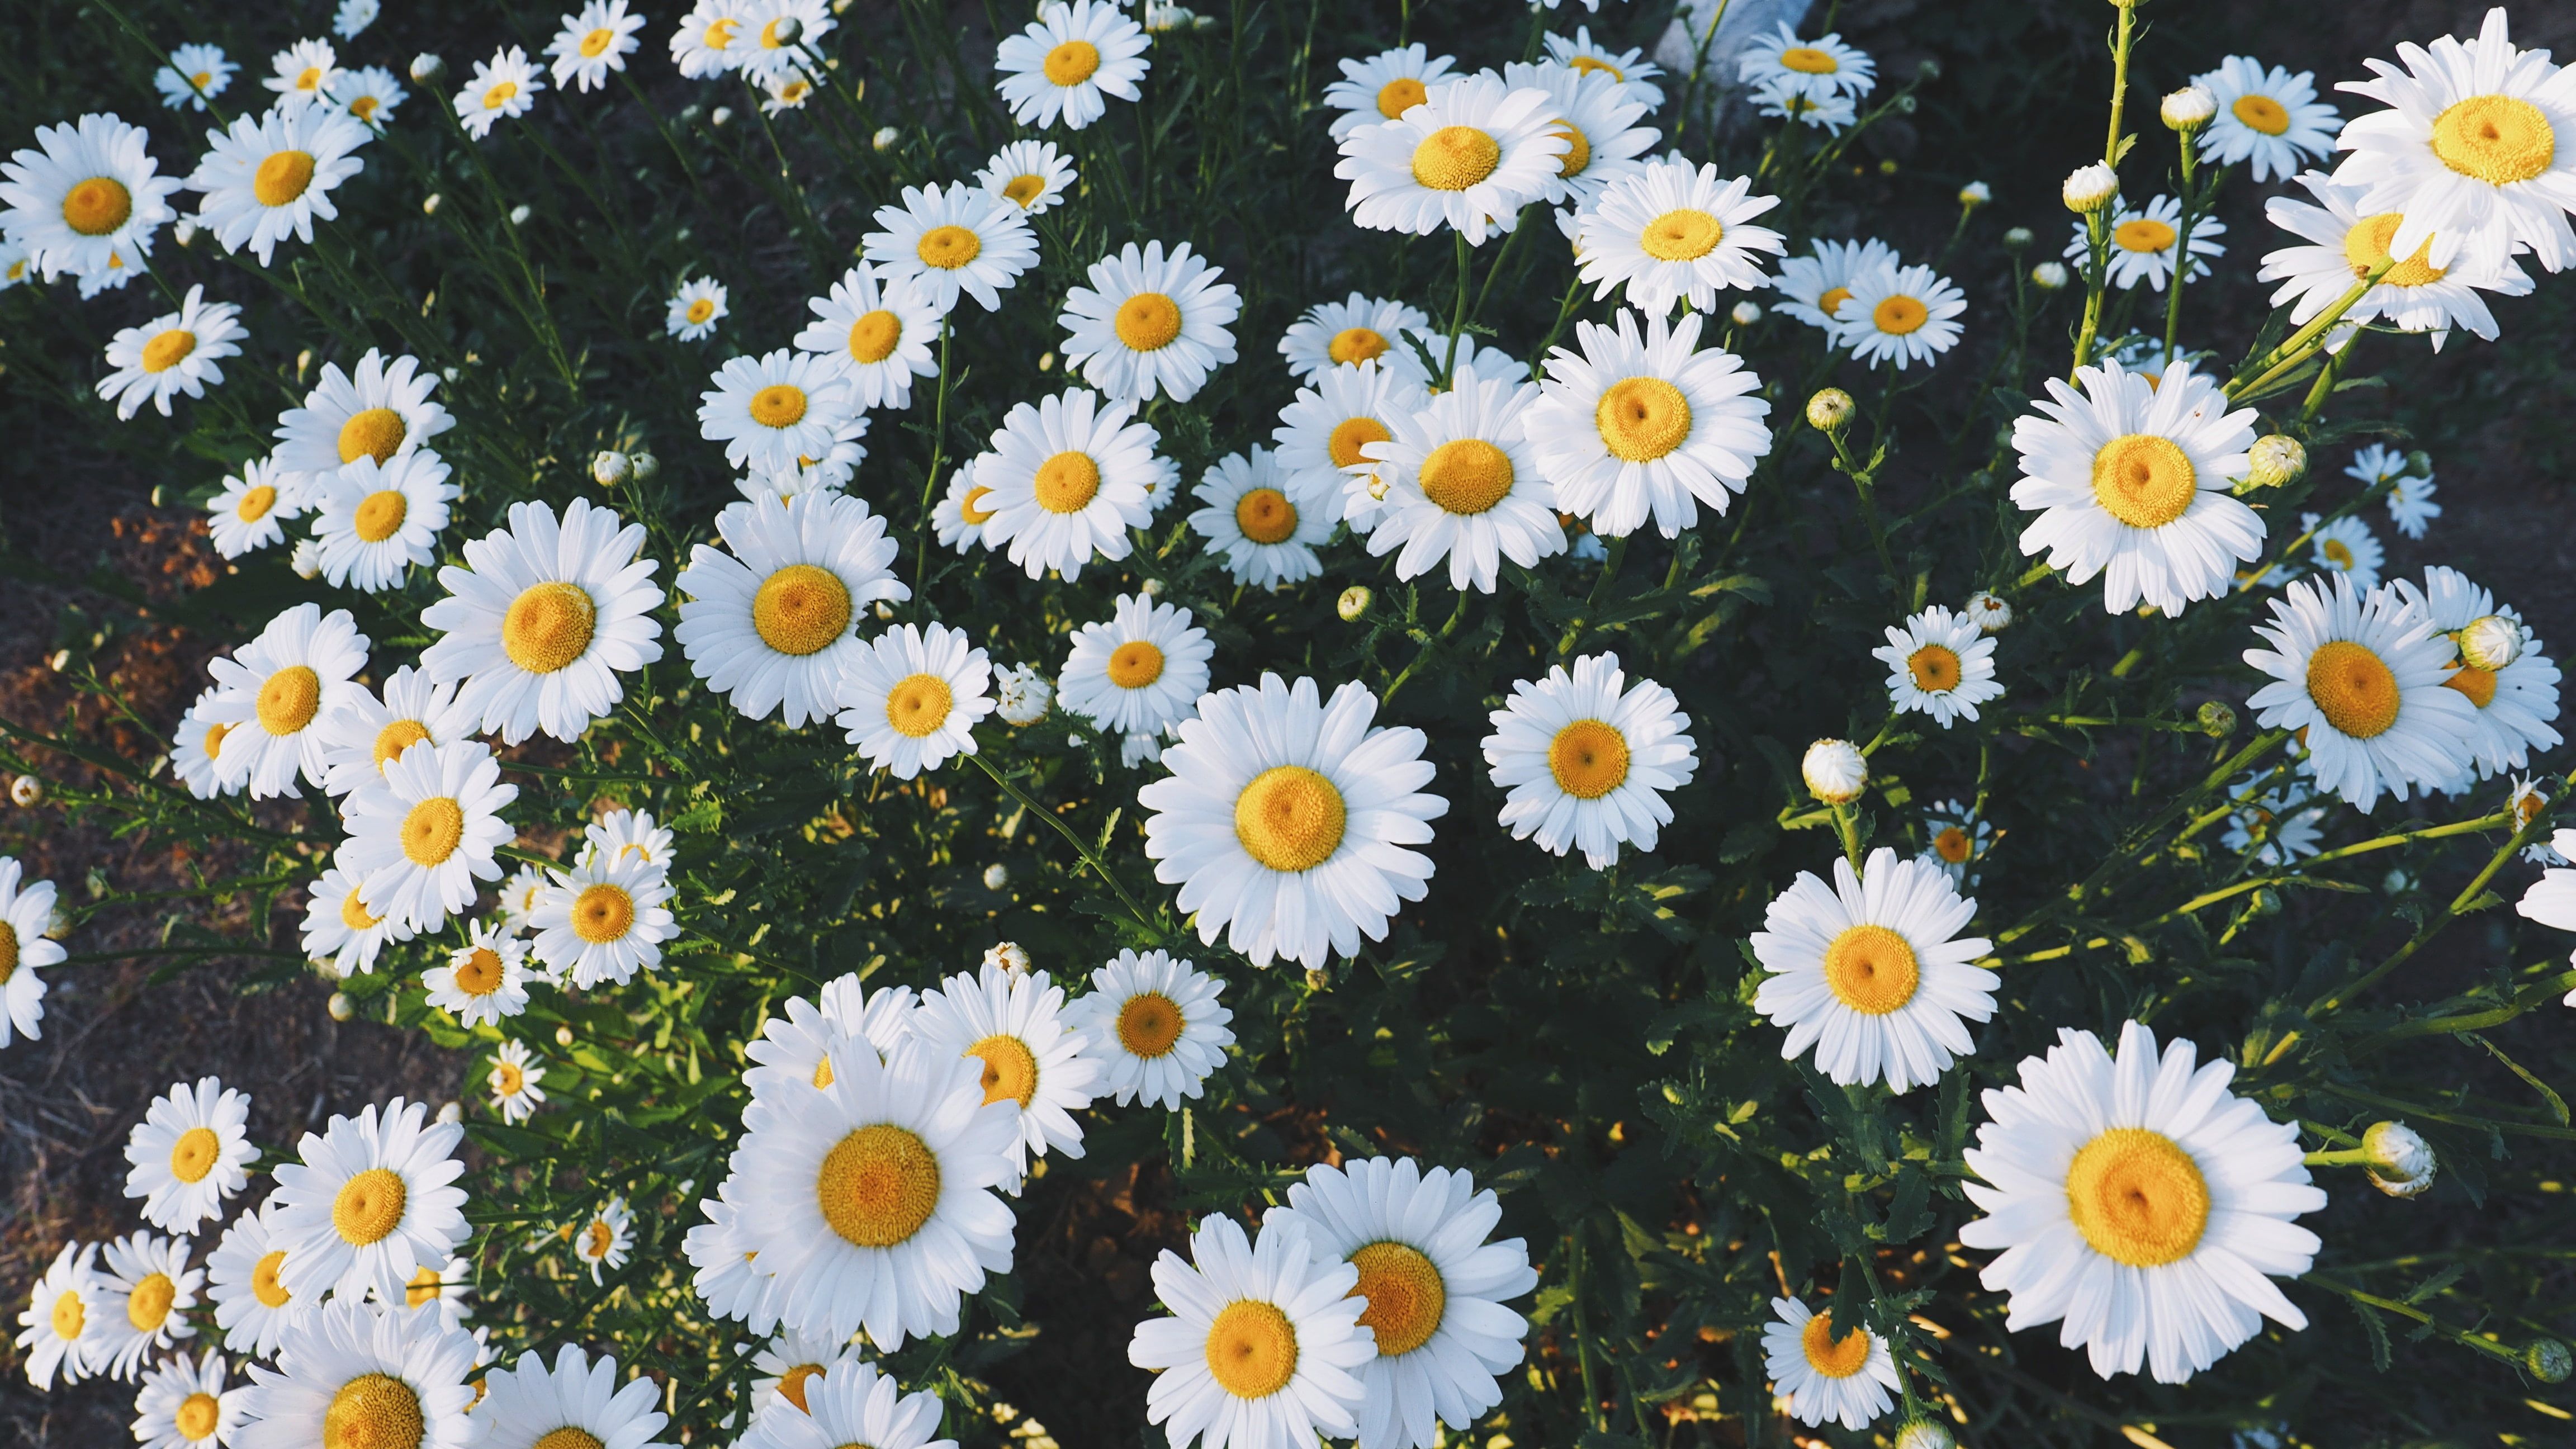 daisy flowers #daisies #glade #flowers #grass K #wallpaper #hdwallpaper #desktop. Daisy flower, Daisy flower photo, Flower close up